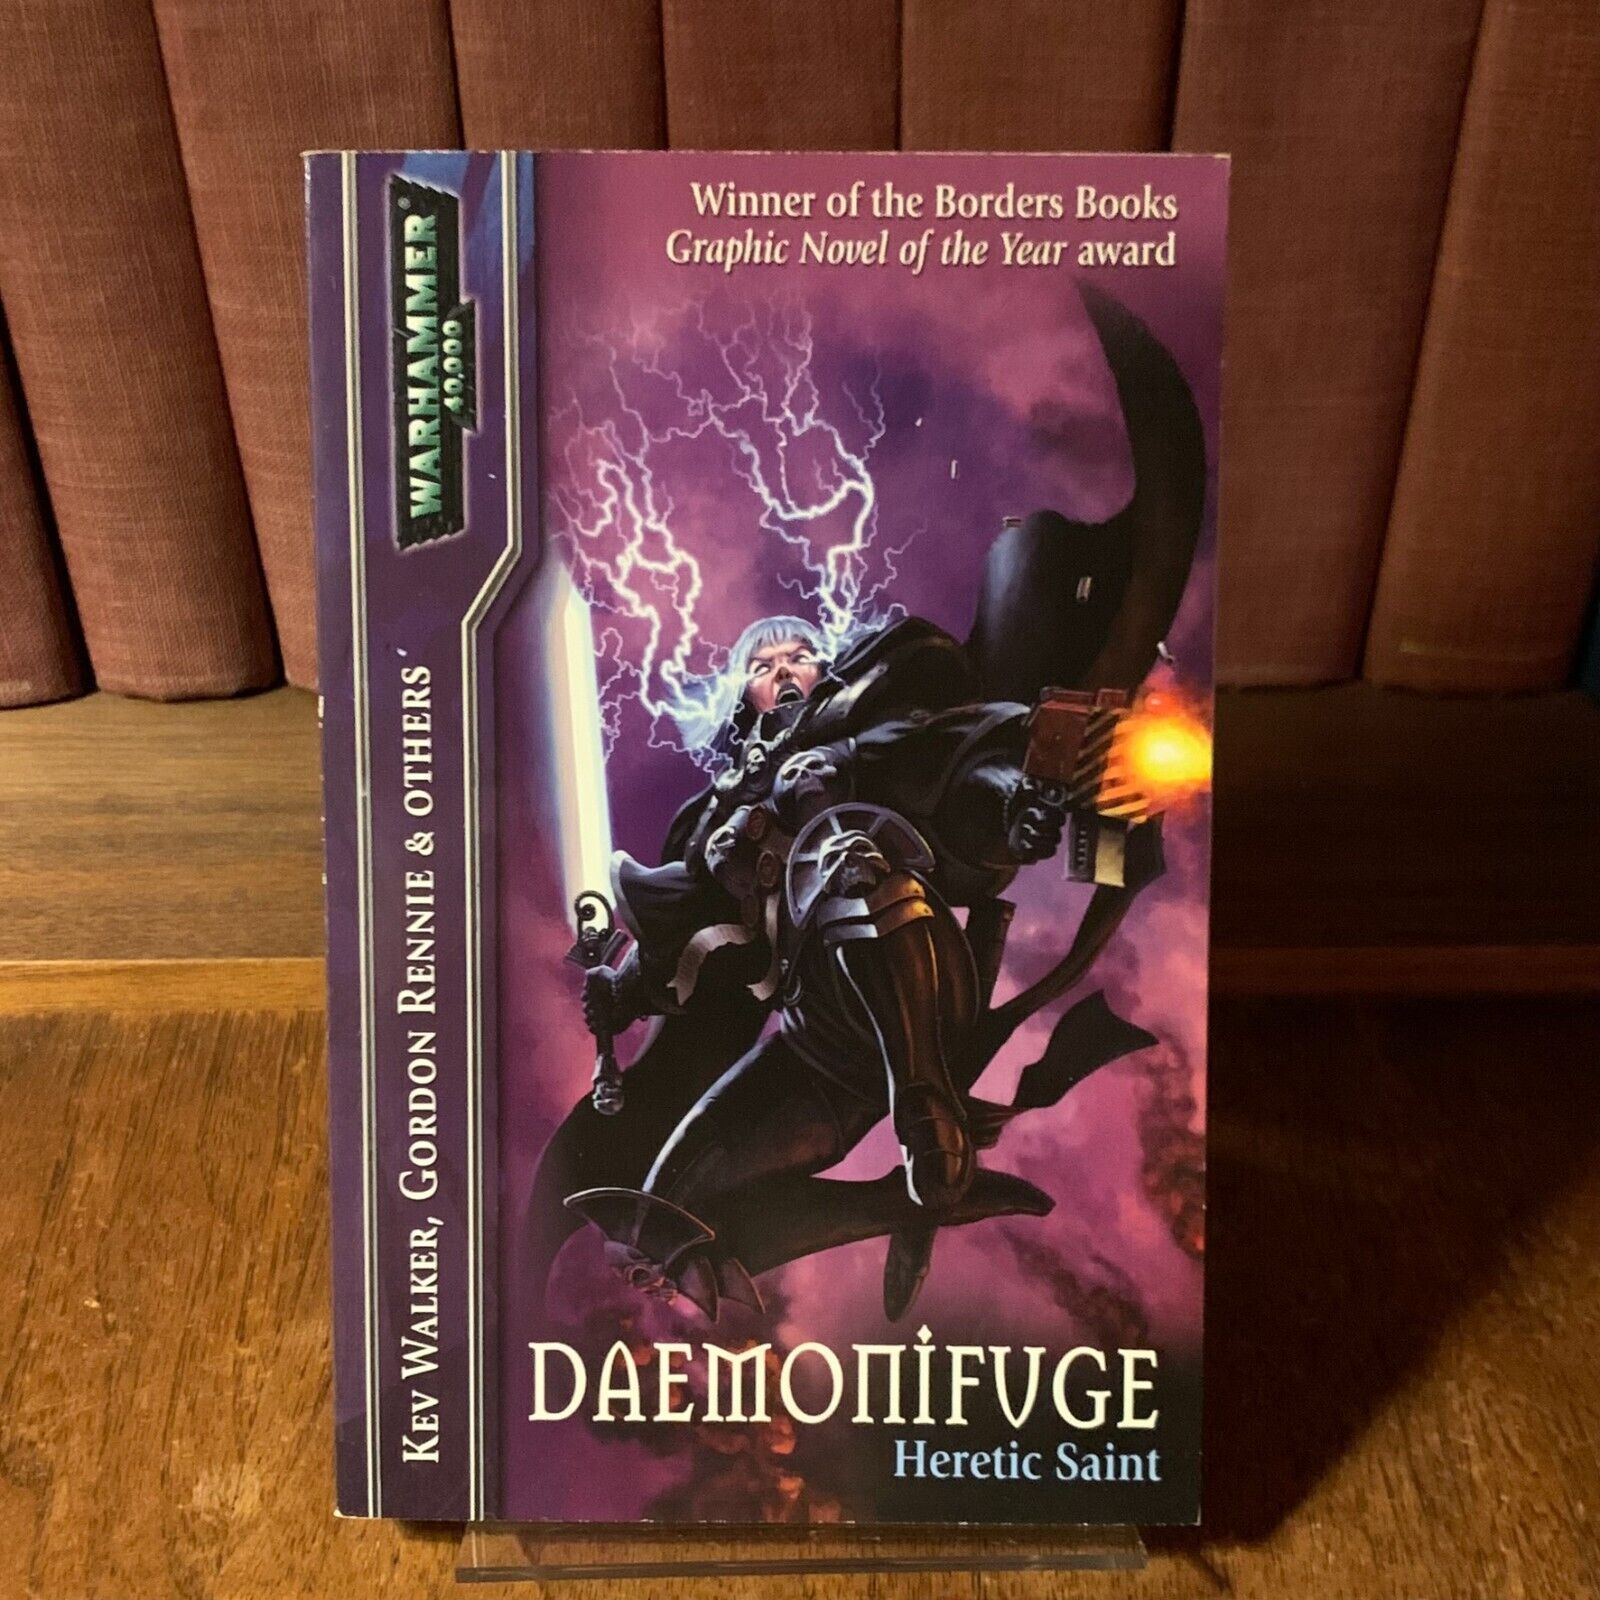 Warhammer 40k: Daemonifuge Heretic Saint by Kev Walker, Gordon Rennie, and more